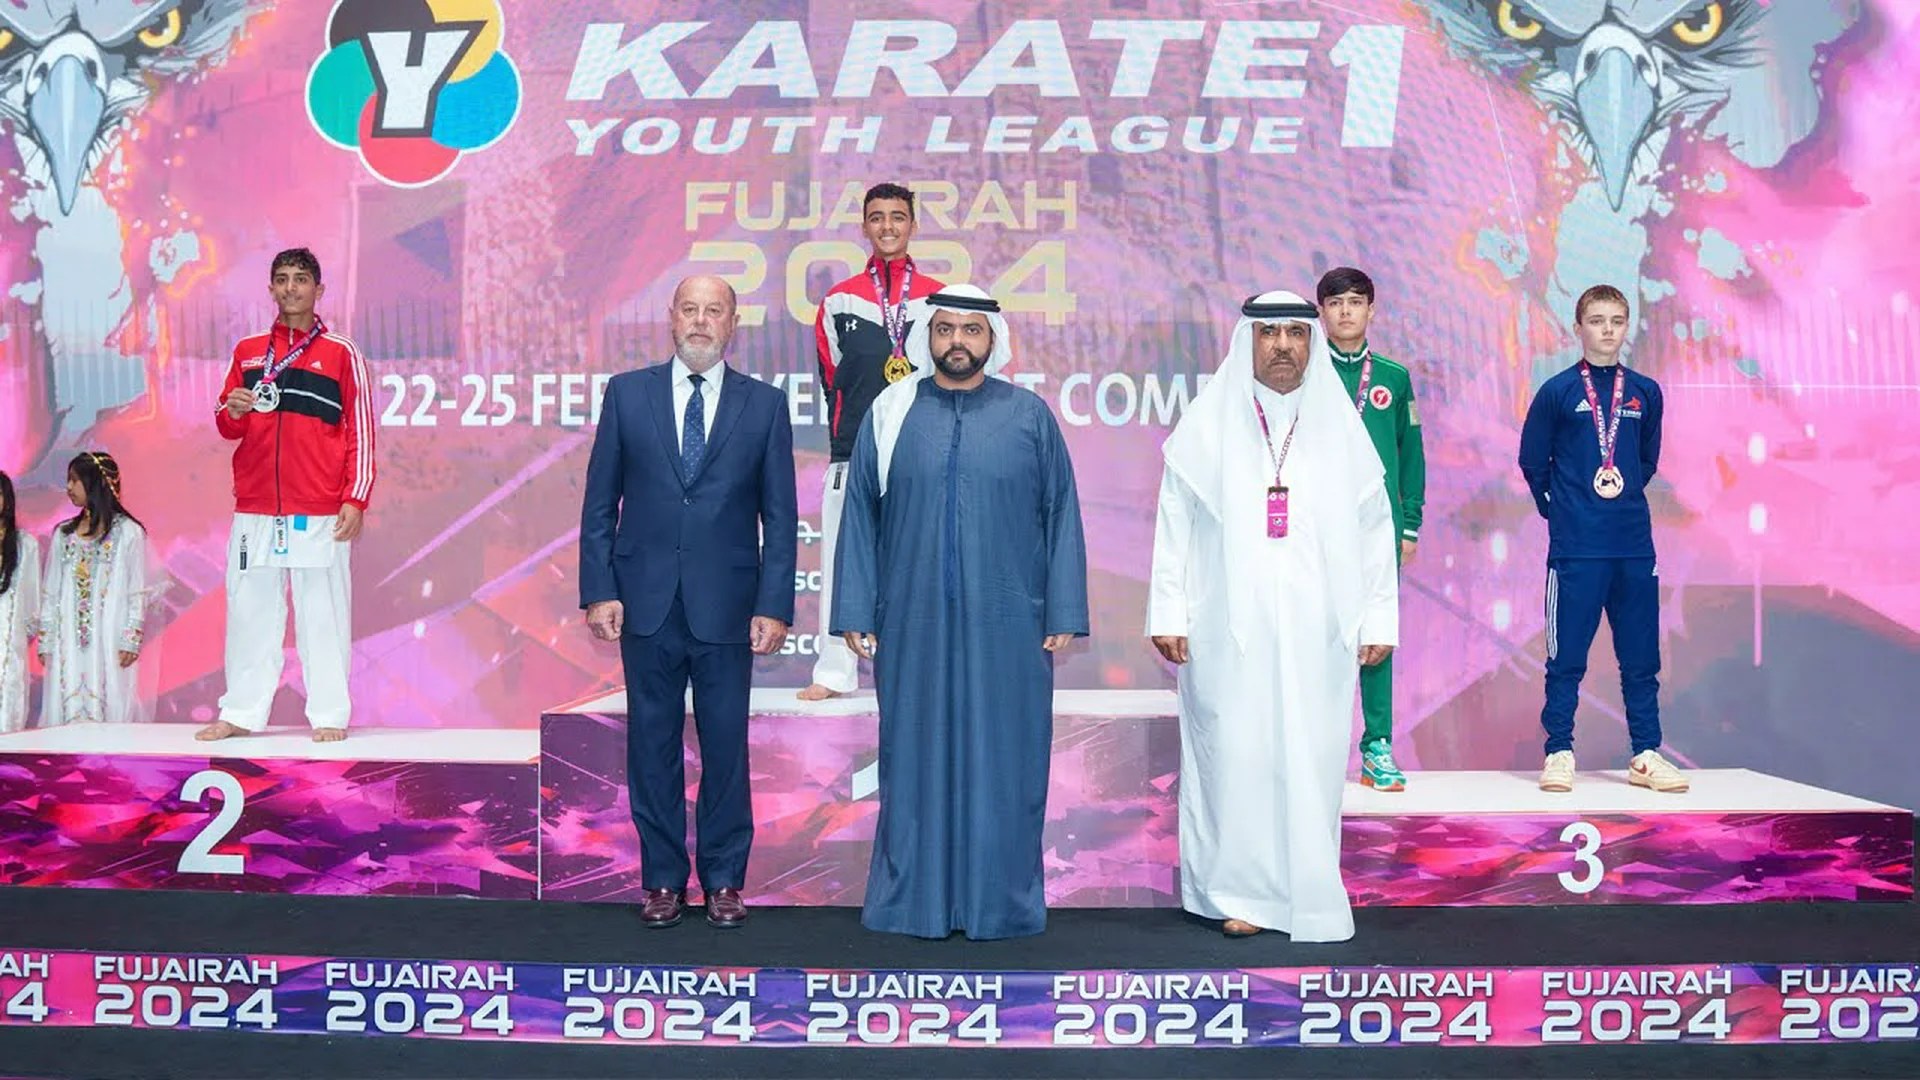 His Highness Sheikh Mohammed bin Hamad bin Mohammed Al Sharqi, Crown Prince of Fujairah, Celebrates Success at World Youth Karate League Championship in Fujairah